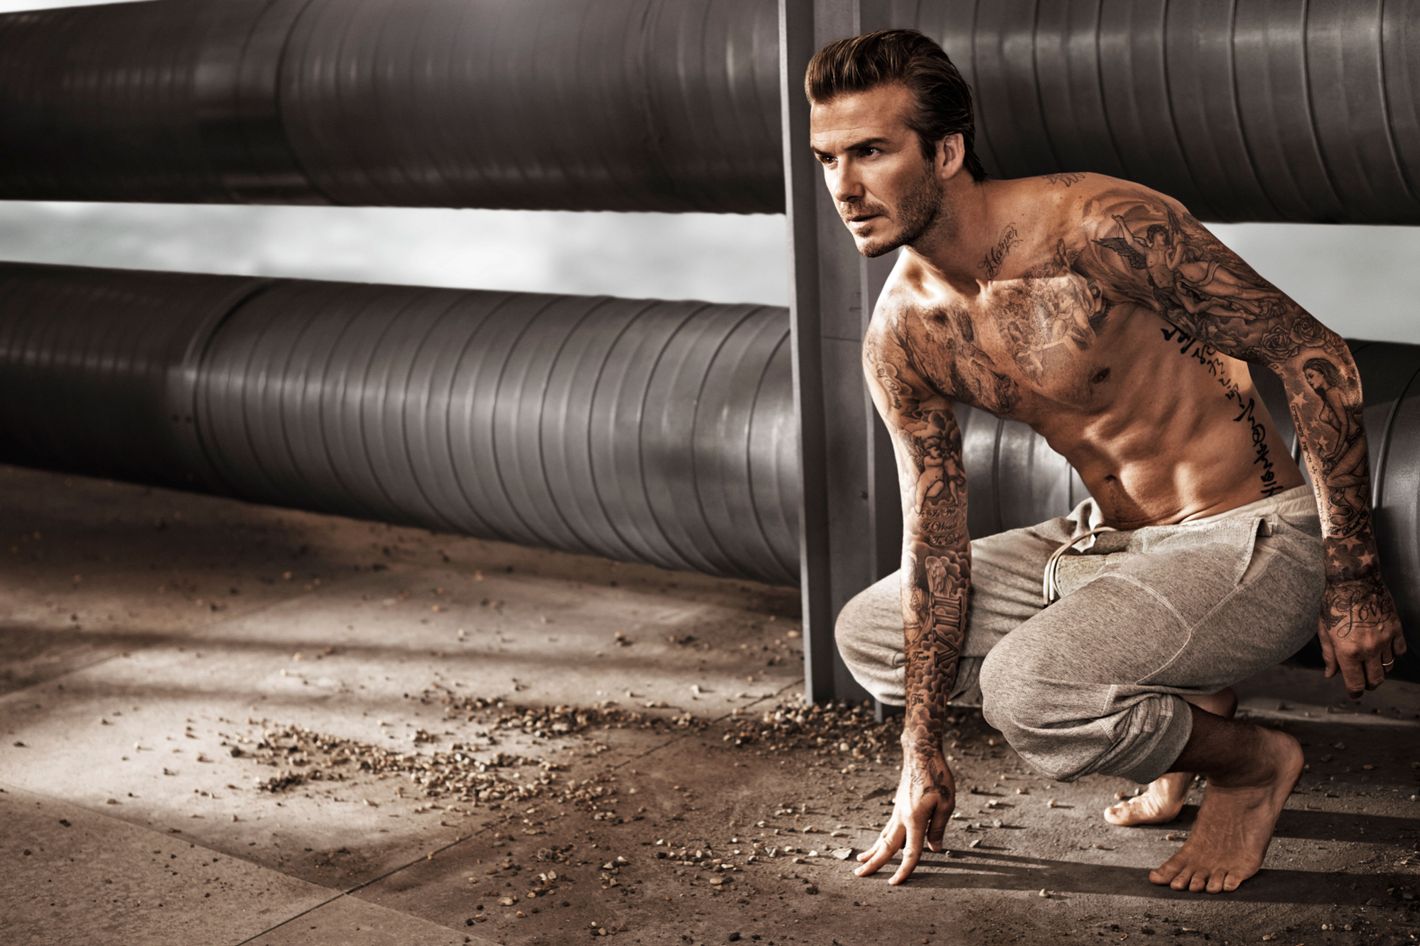 David Beckham to star in Super Bowl ad